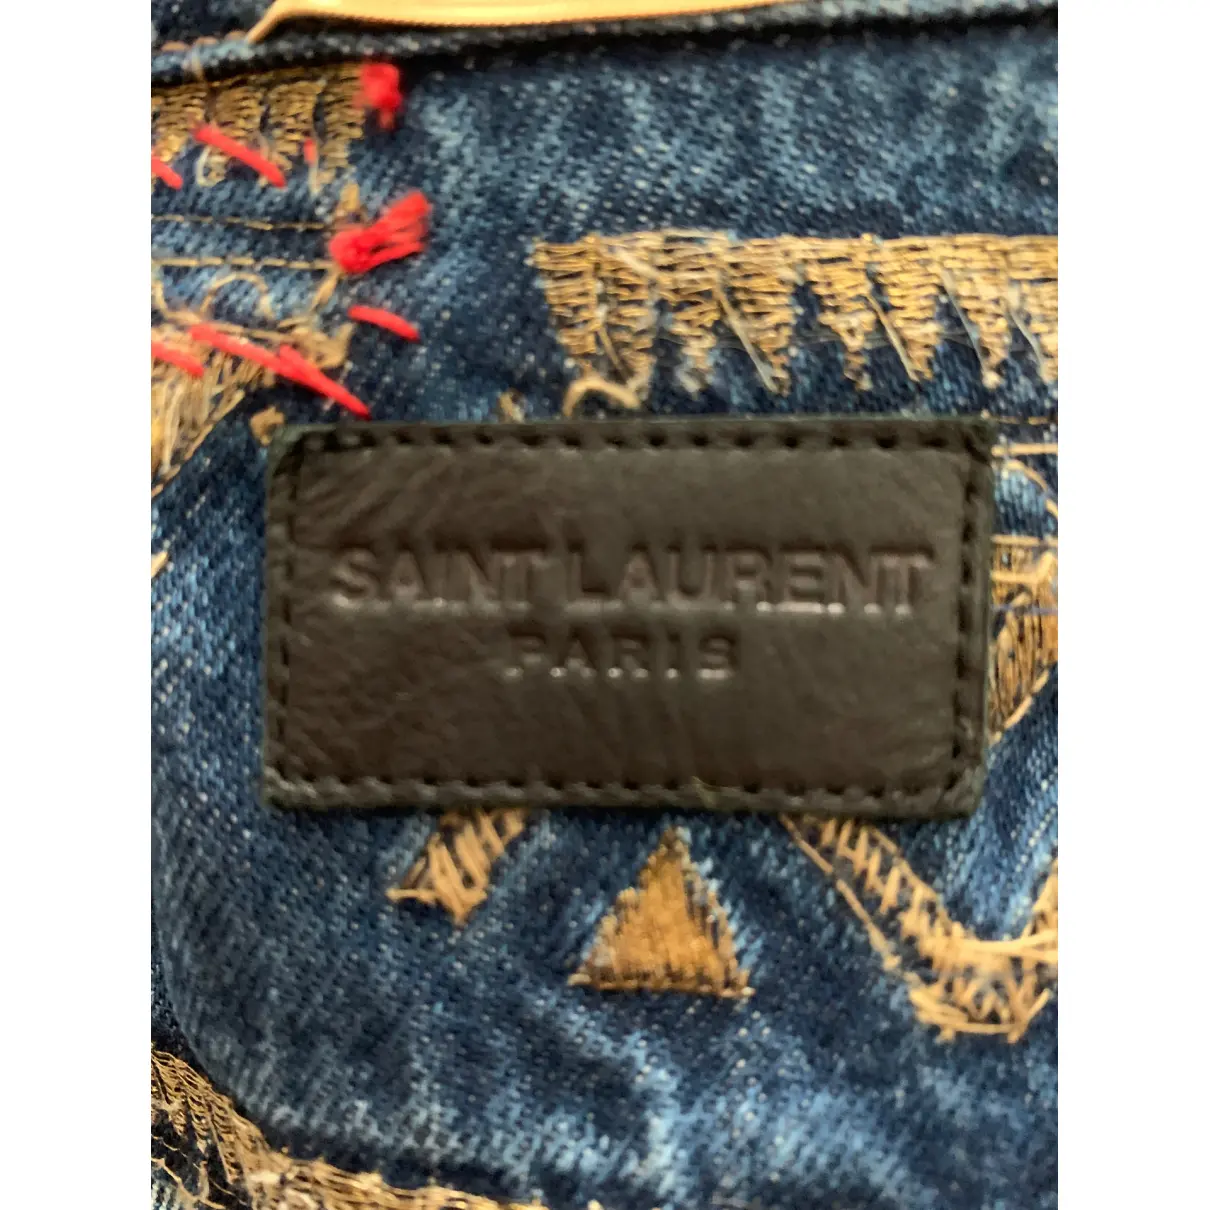 Buy Saint Laurent Short vest online